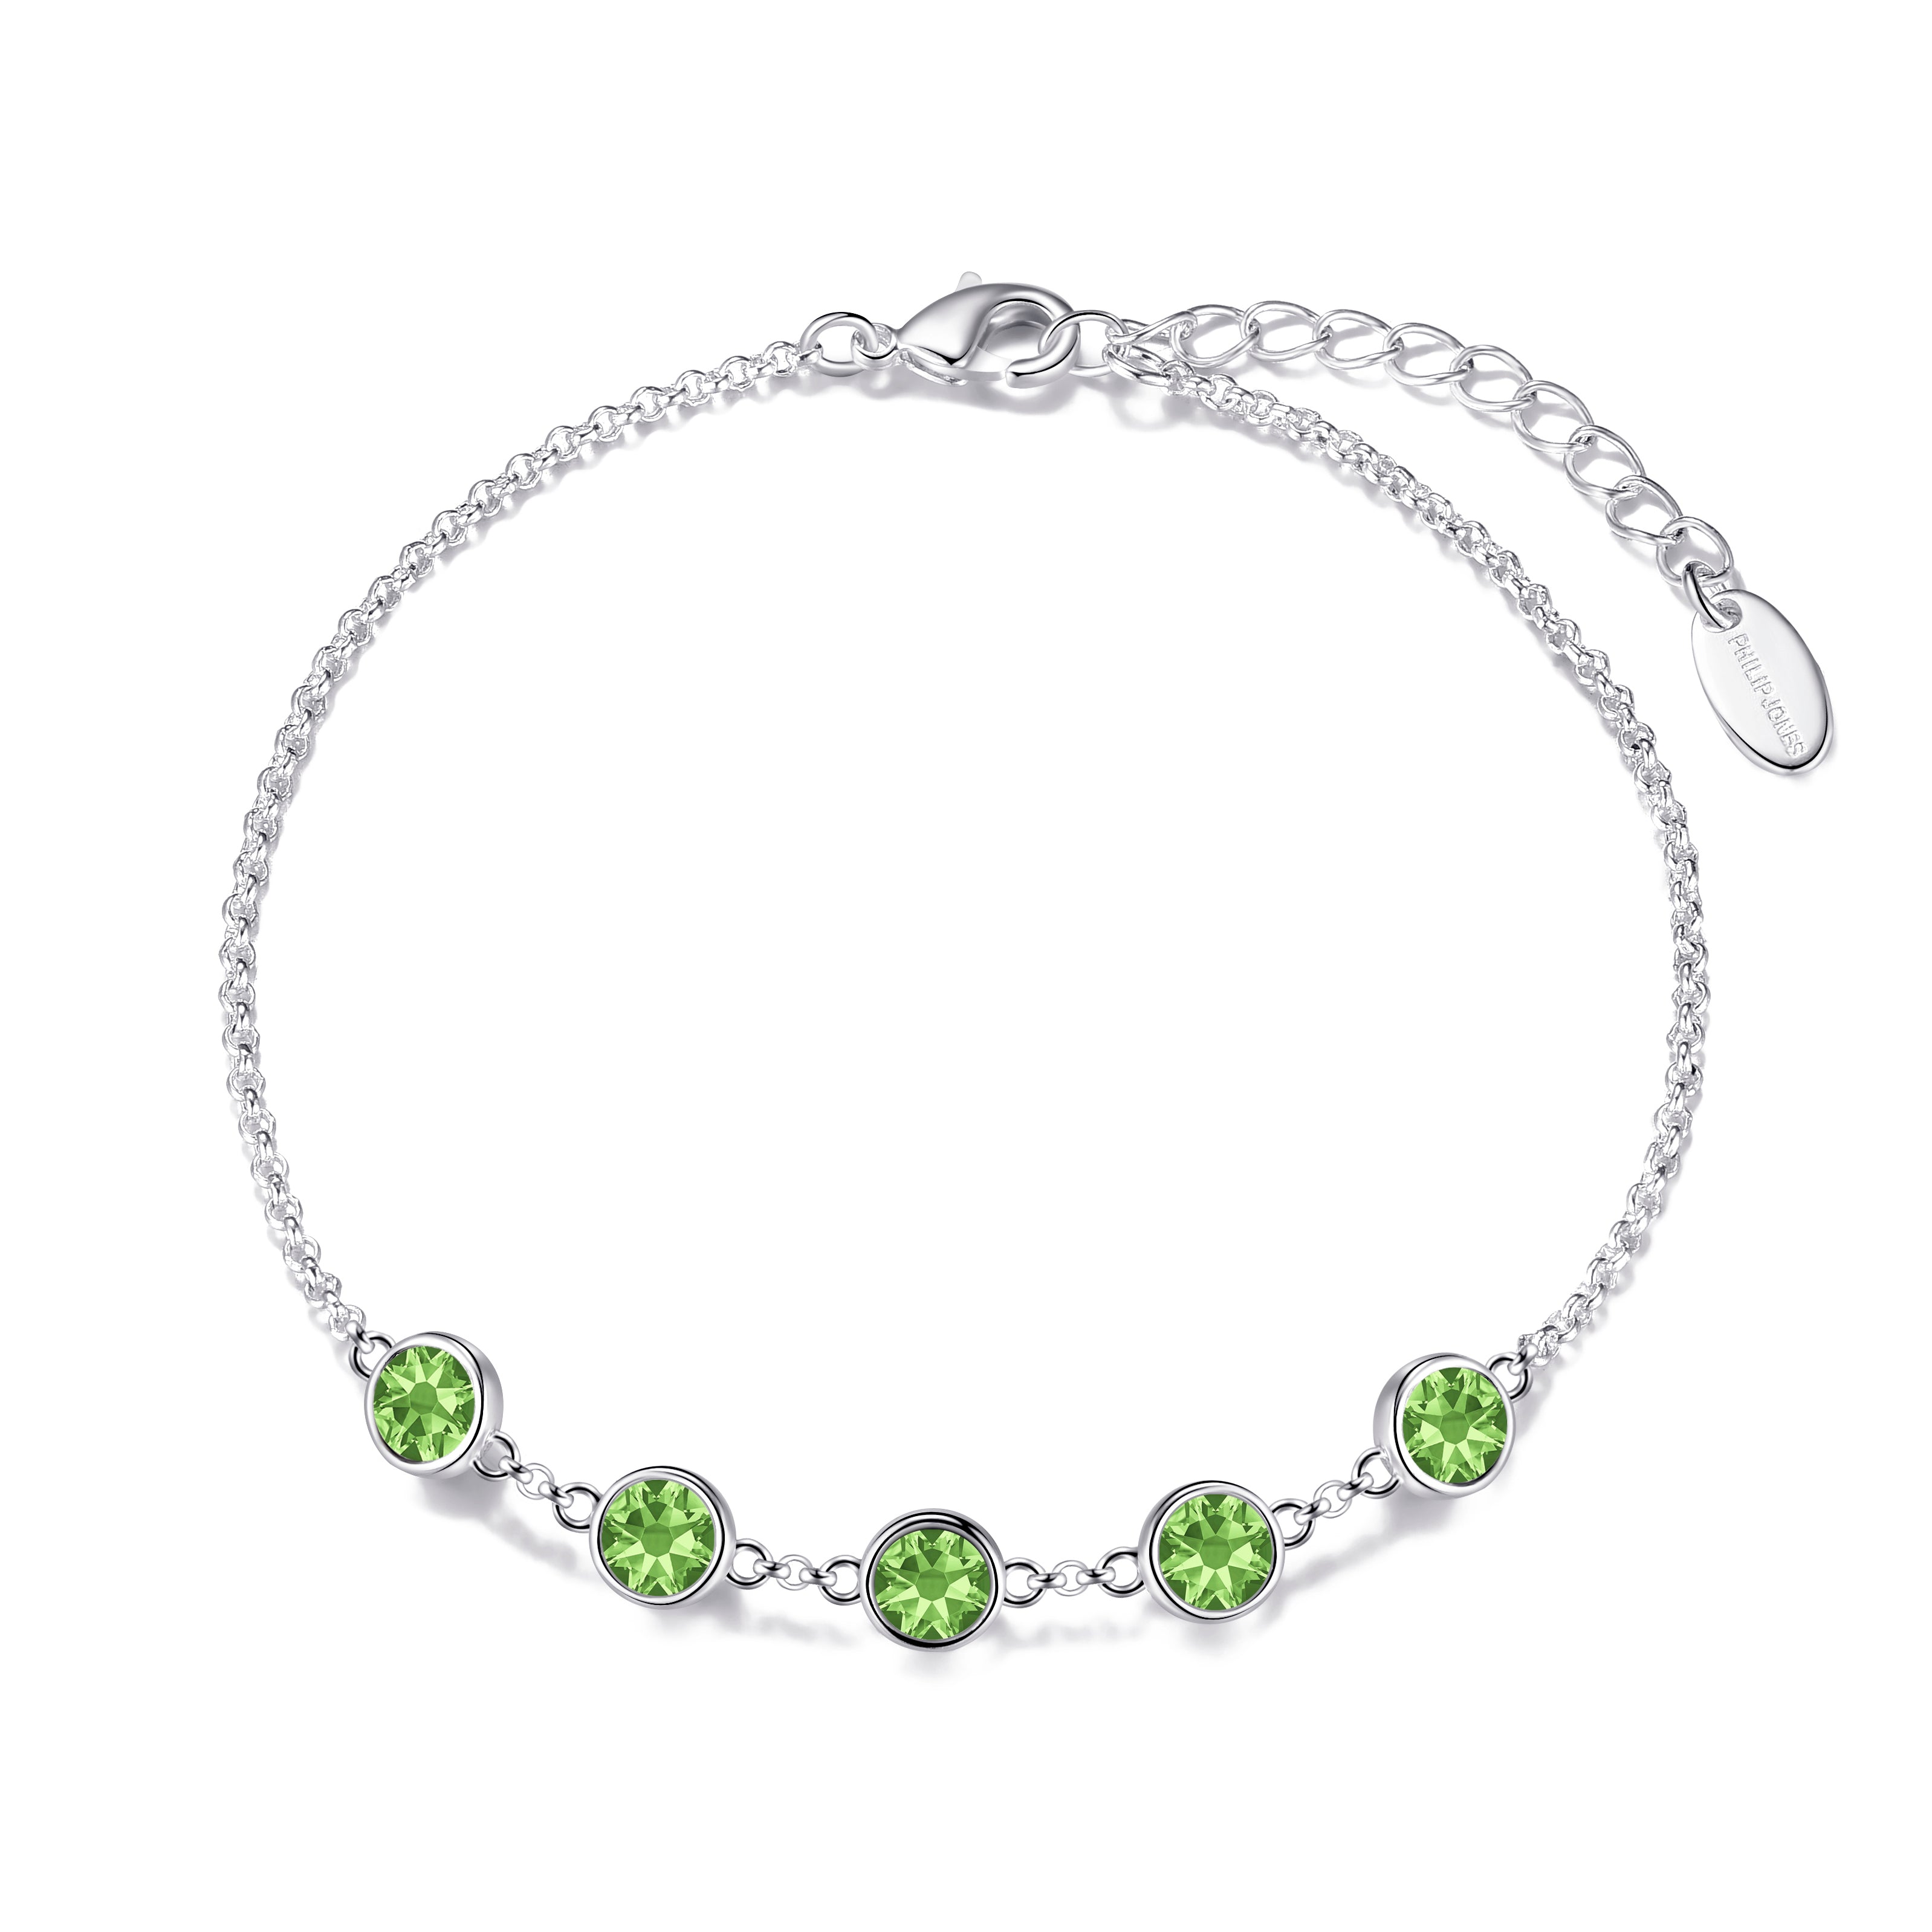 Light Green Crystal Chain Bracelet Created with Zircondia® Crystals by Philip Jones Jewellery